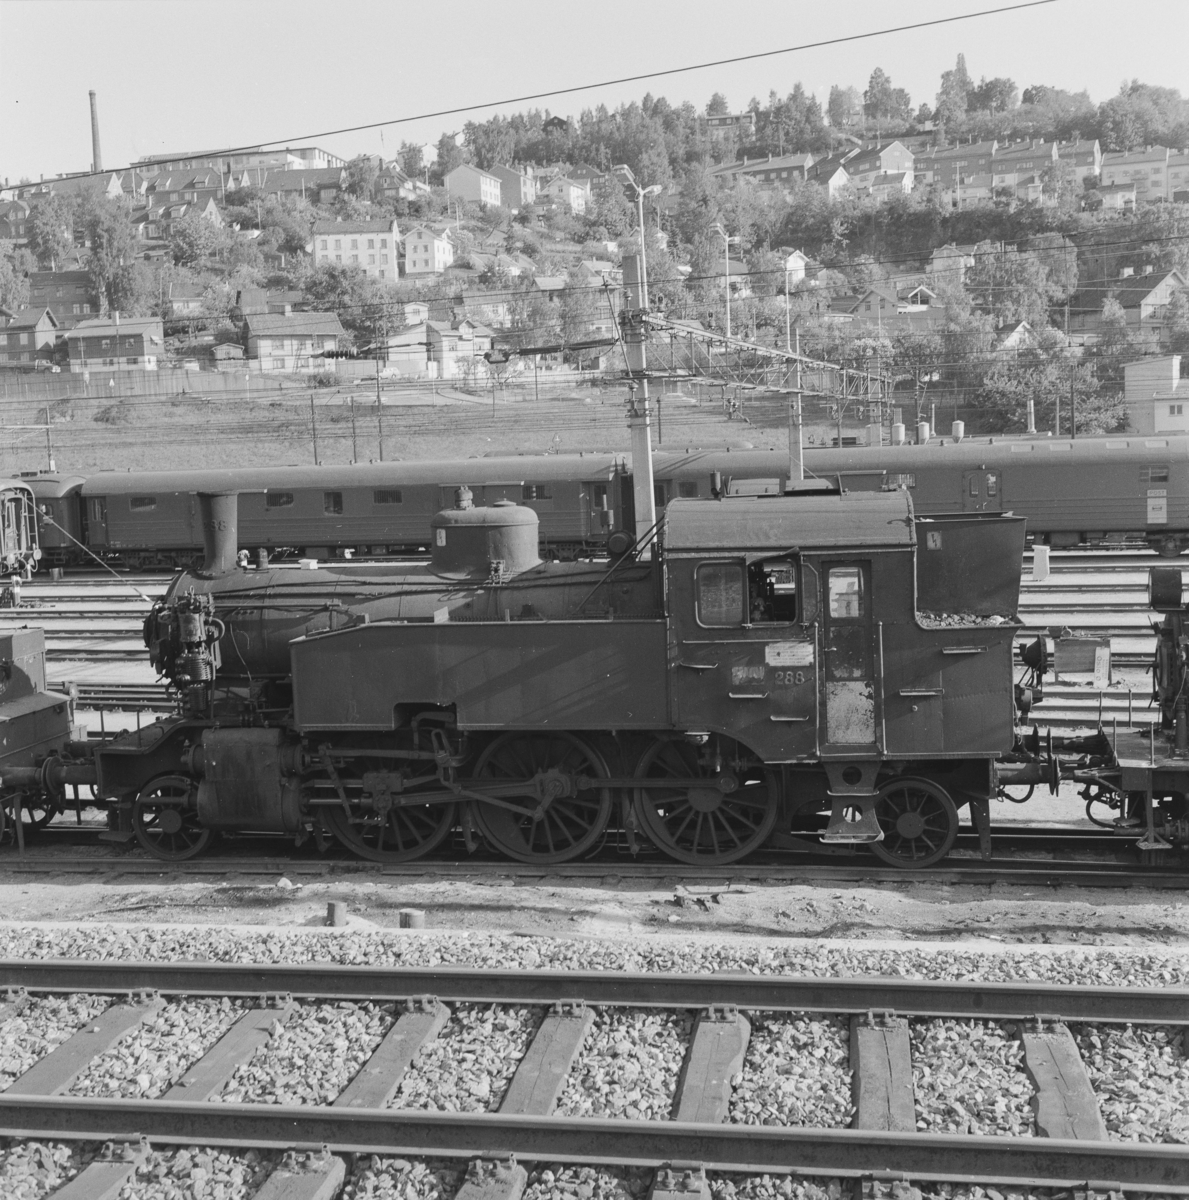 Hensatte damplokomotiver i Lodalen i Oslo.